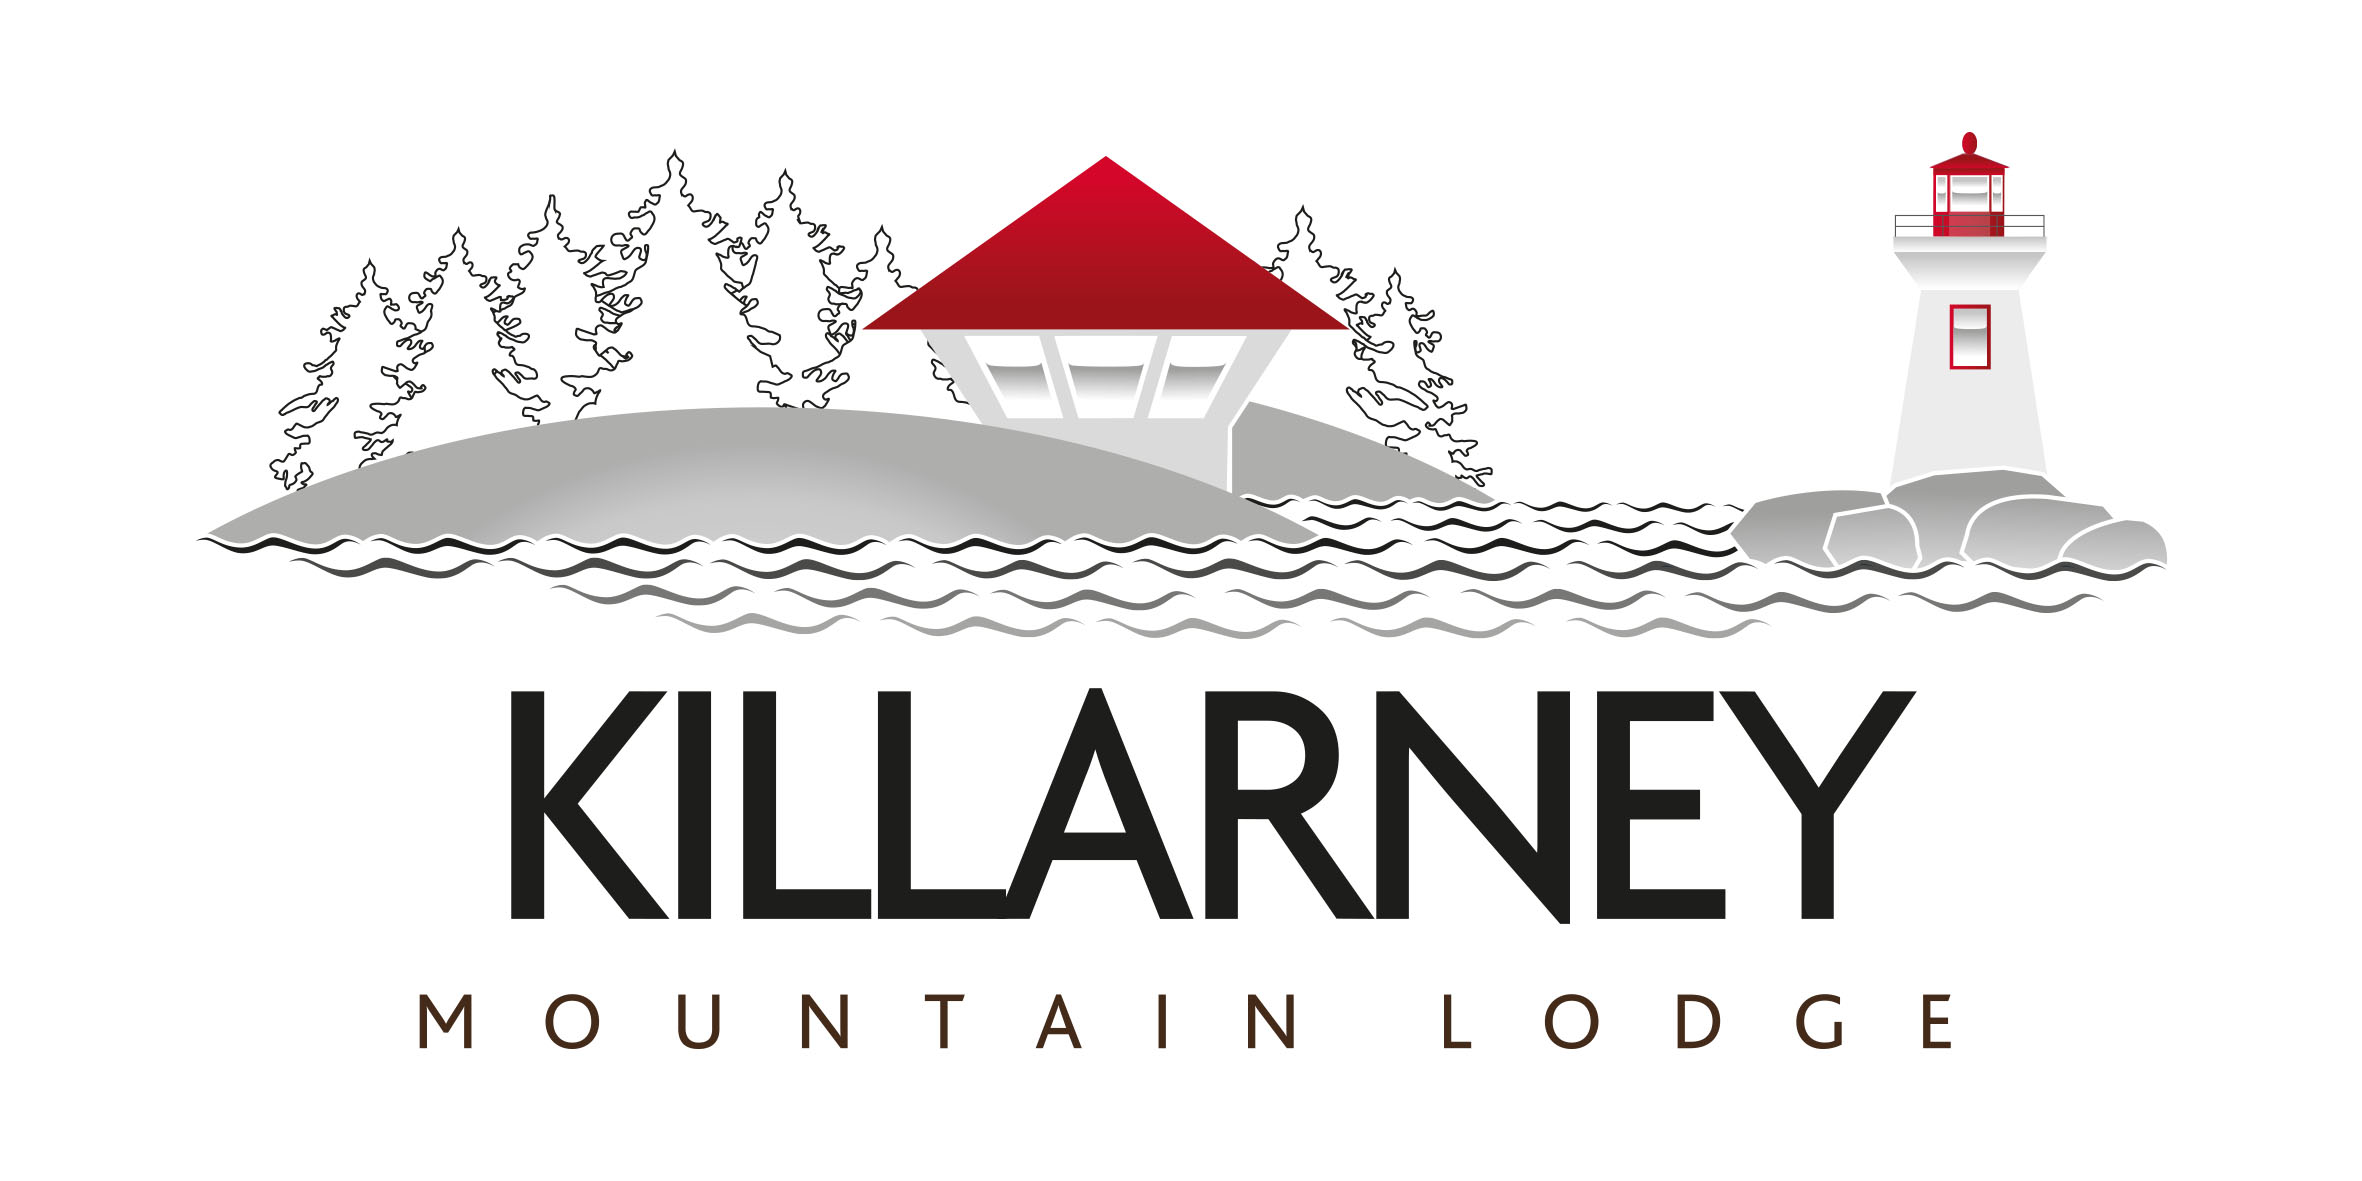 Killarney Mountain Lodge logo